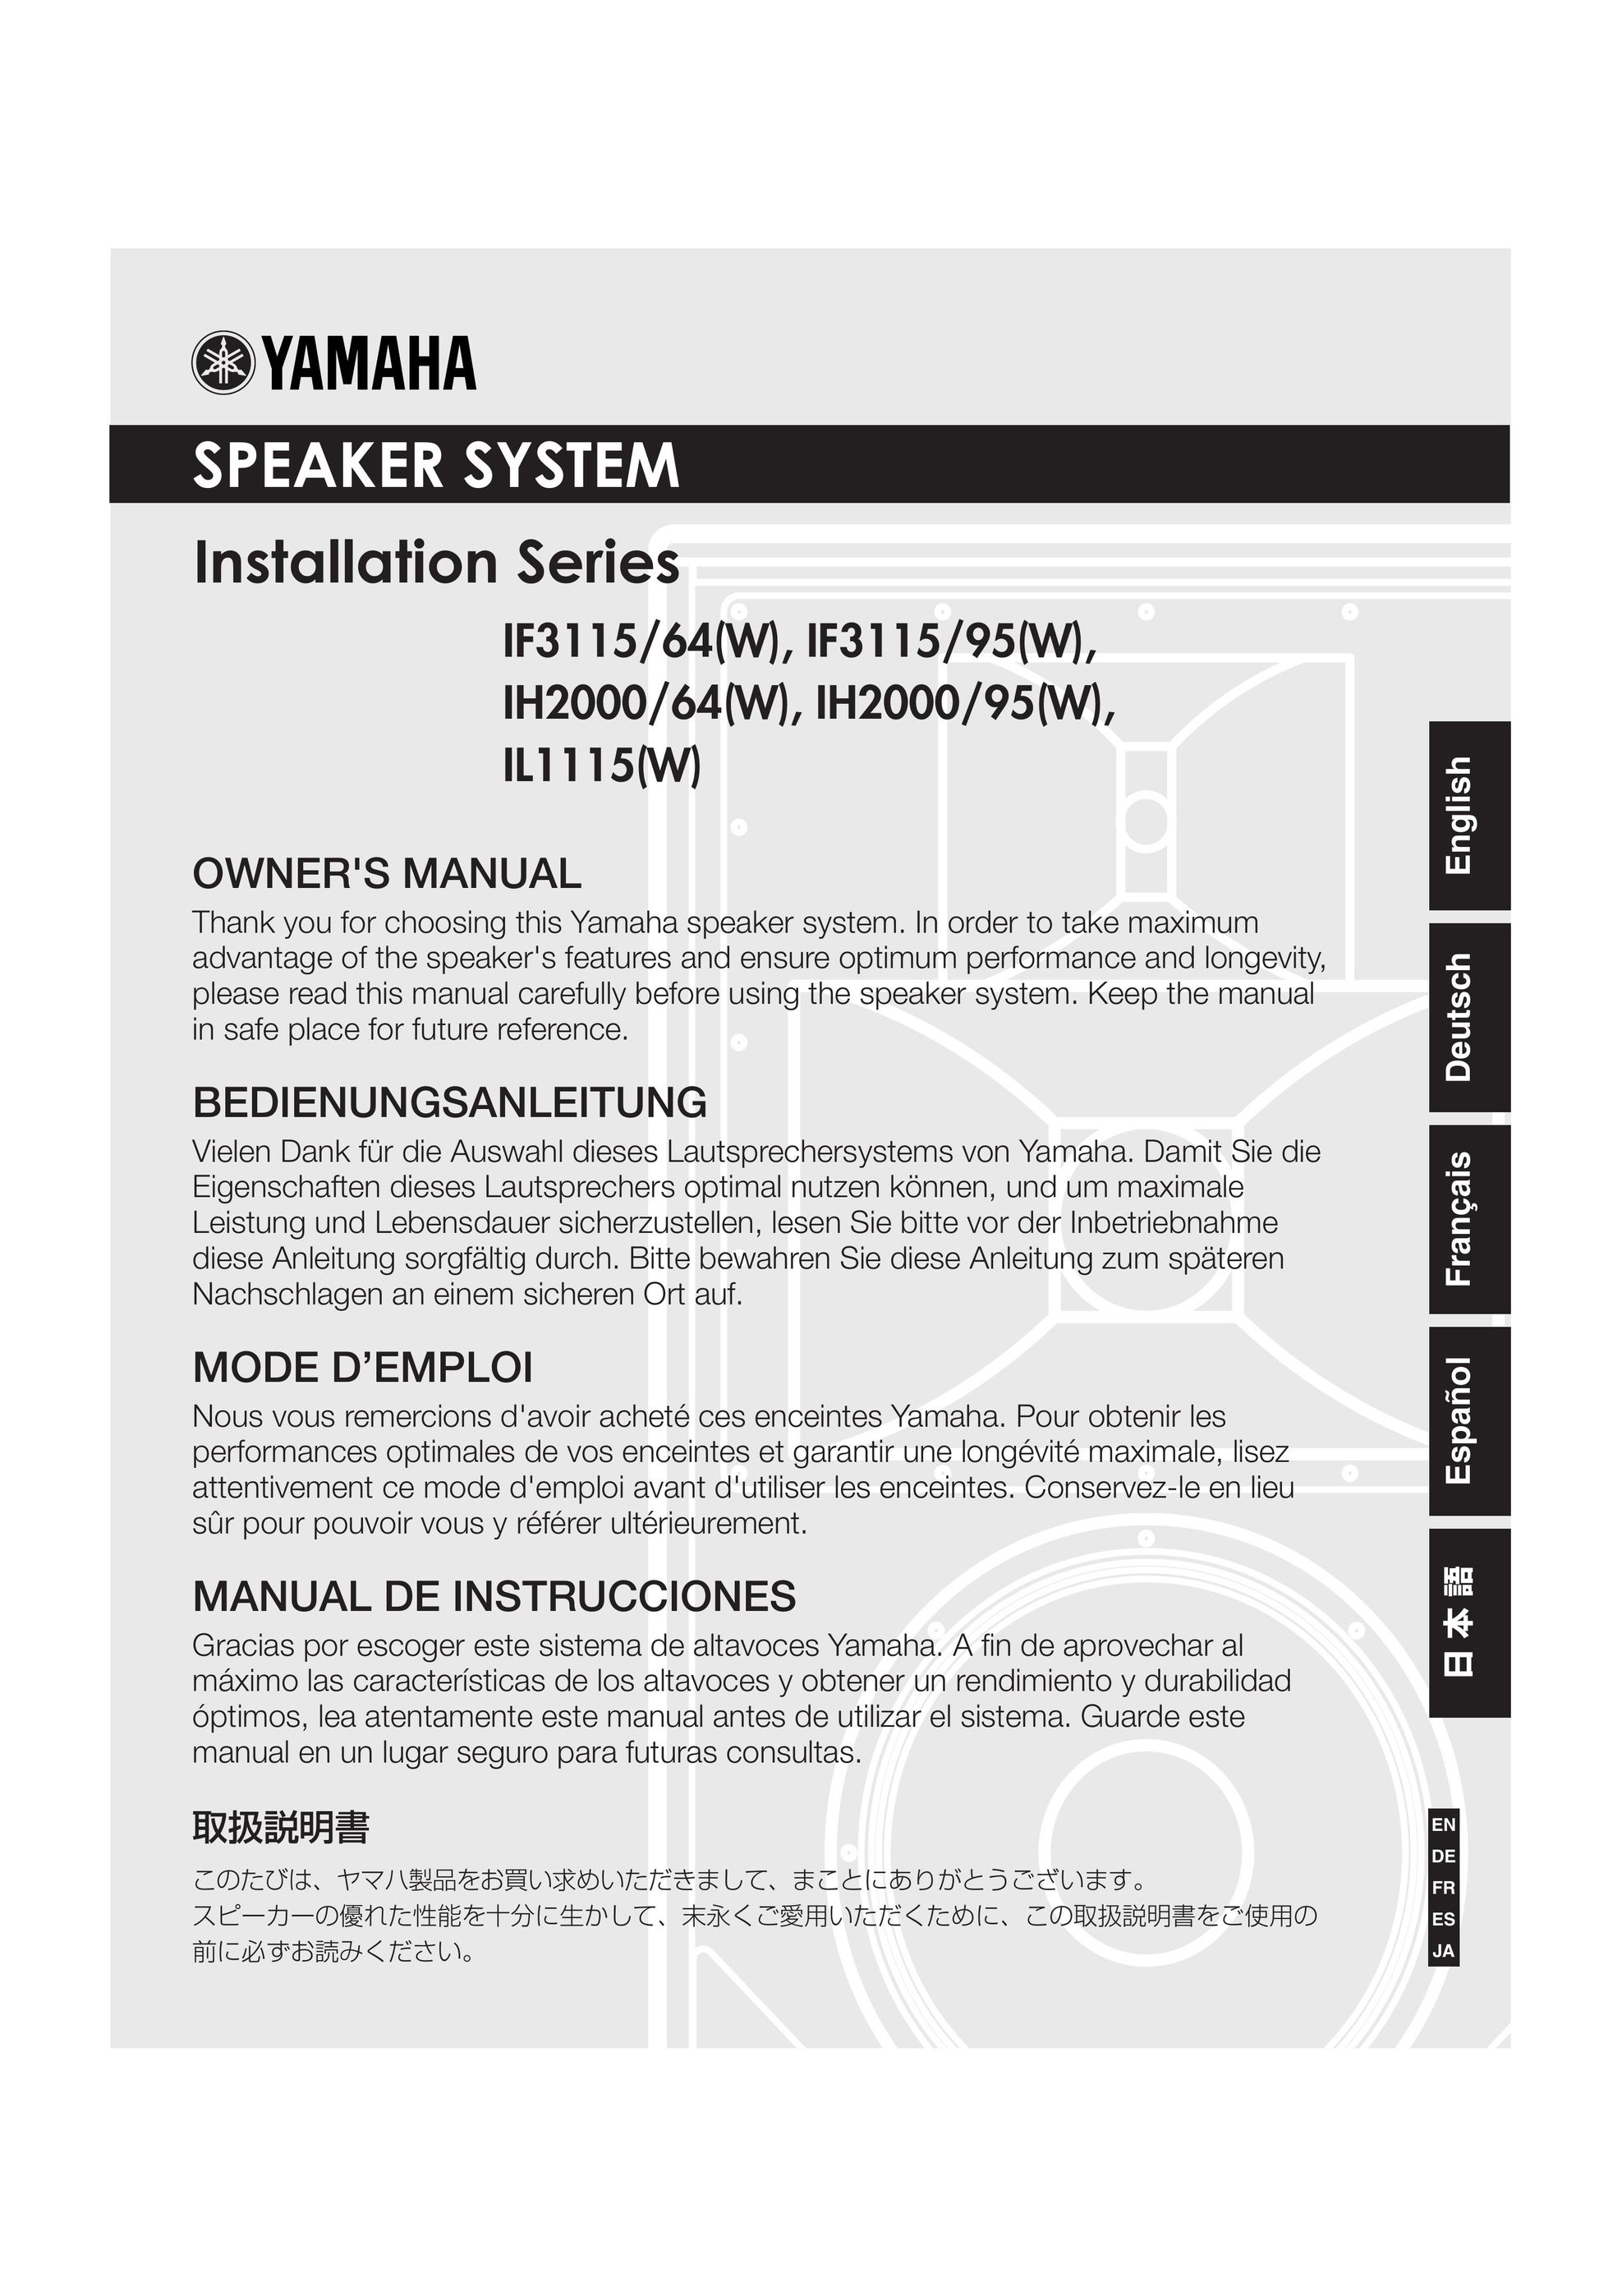 Yamaha IF3115/95(W) Portable Speaker User Manual